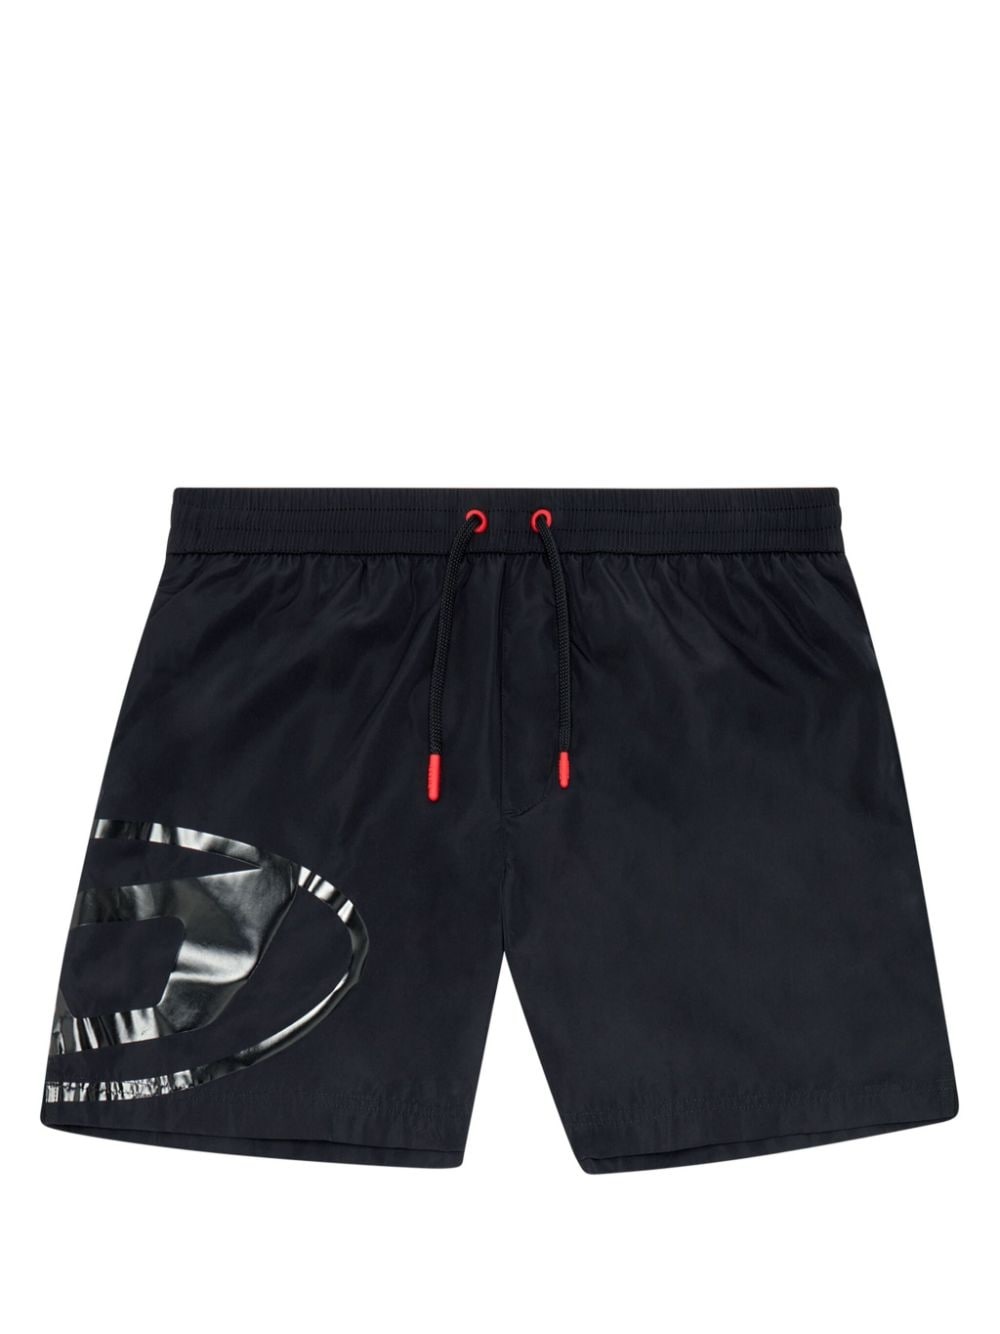 Rio swim shorts - 2